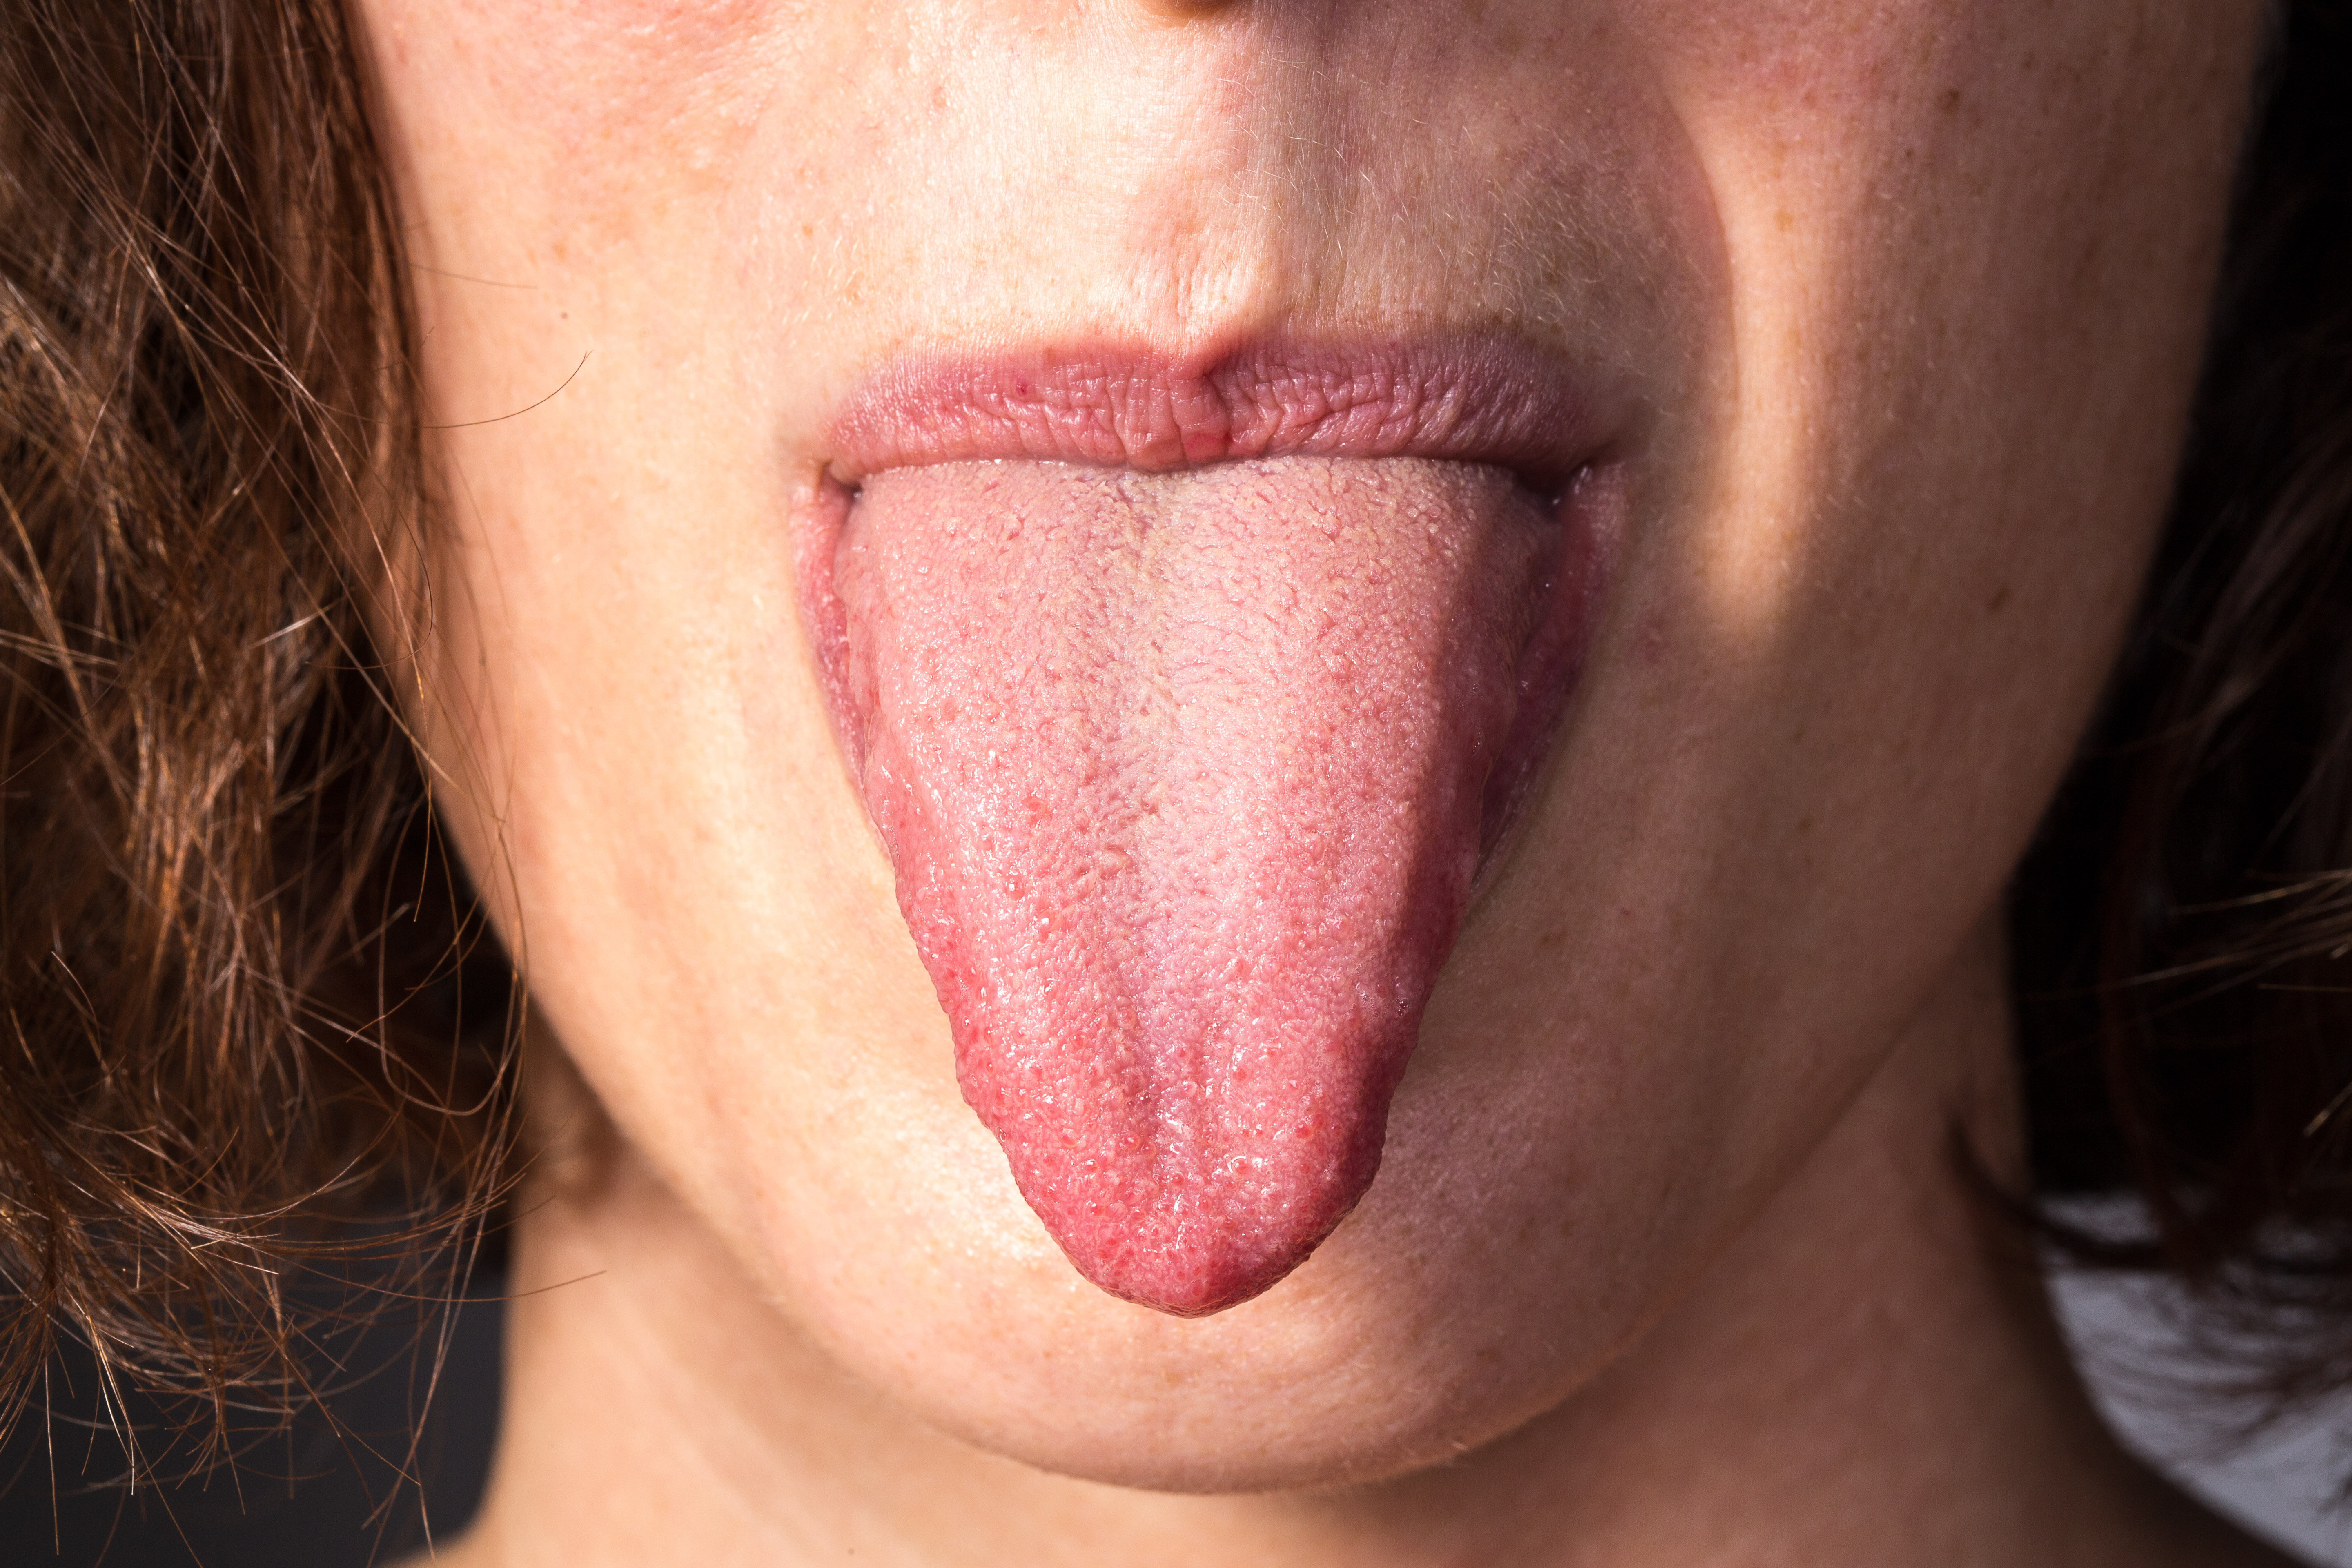 Burning Tongue: 9 Causes, One Life-Threatening